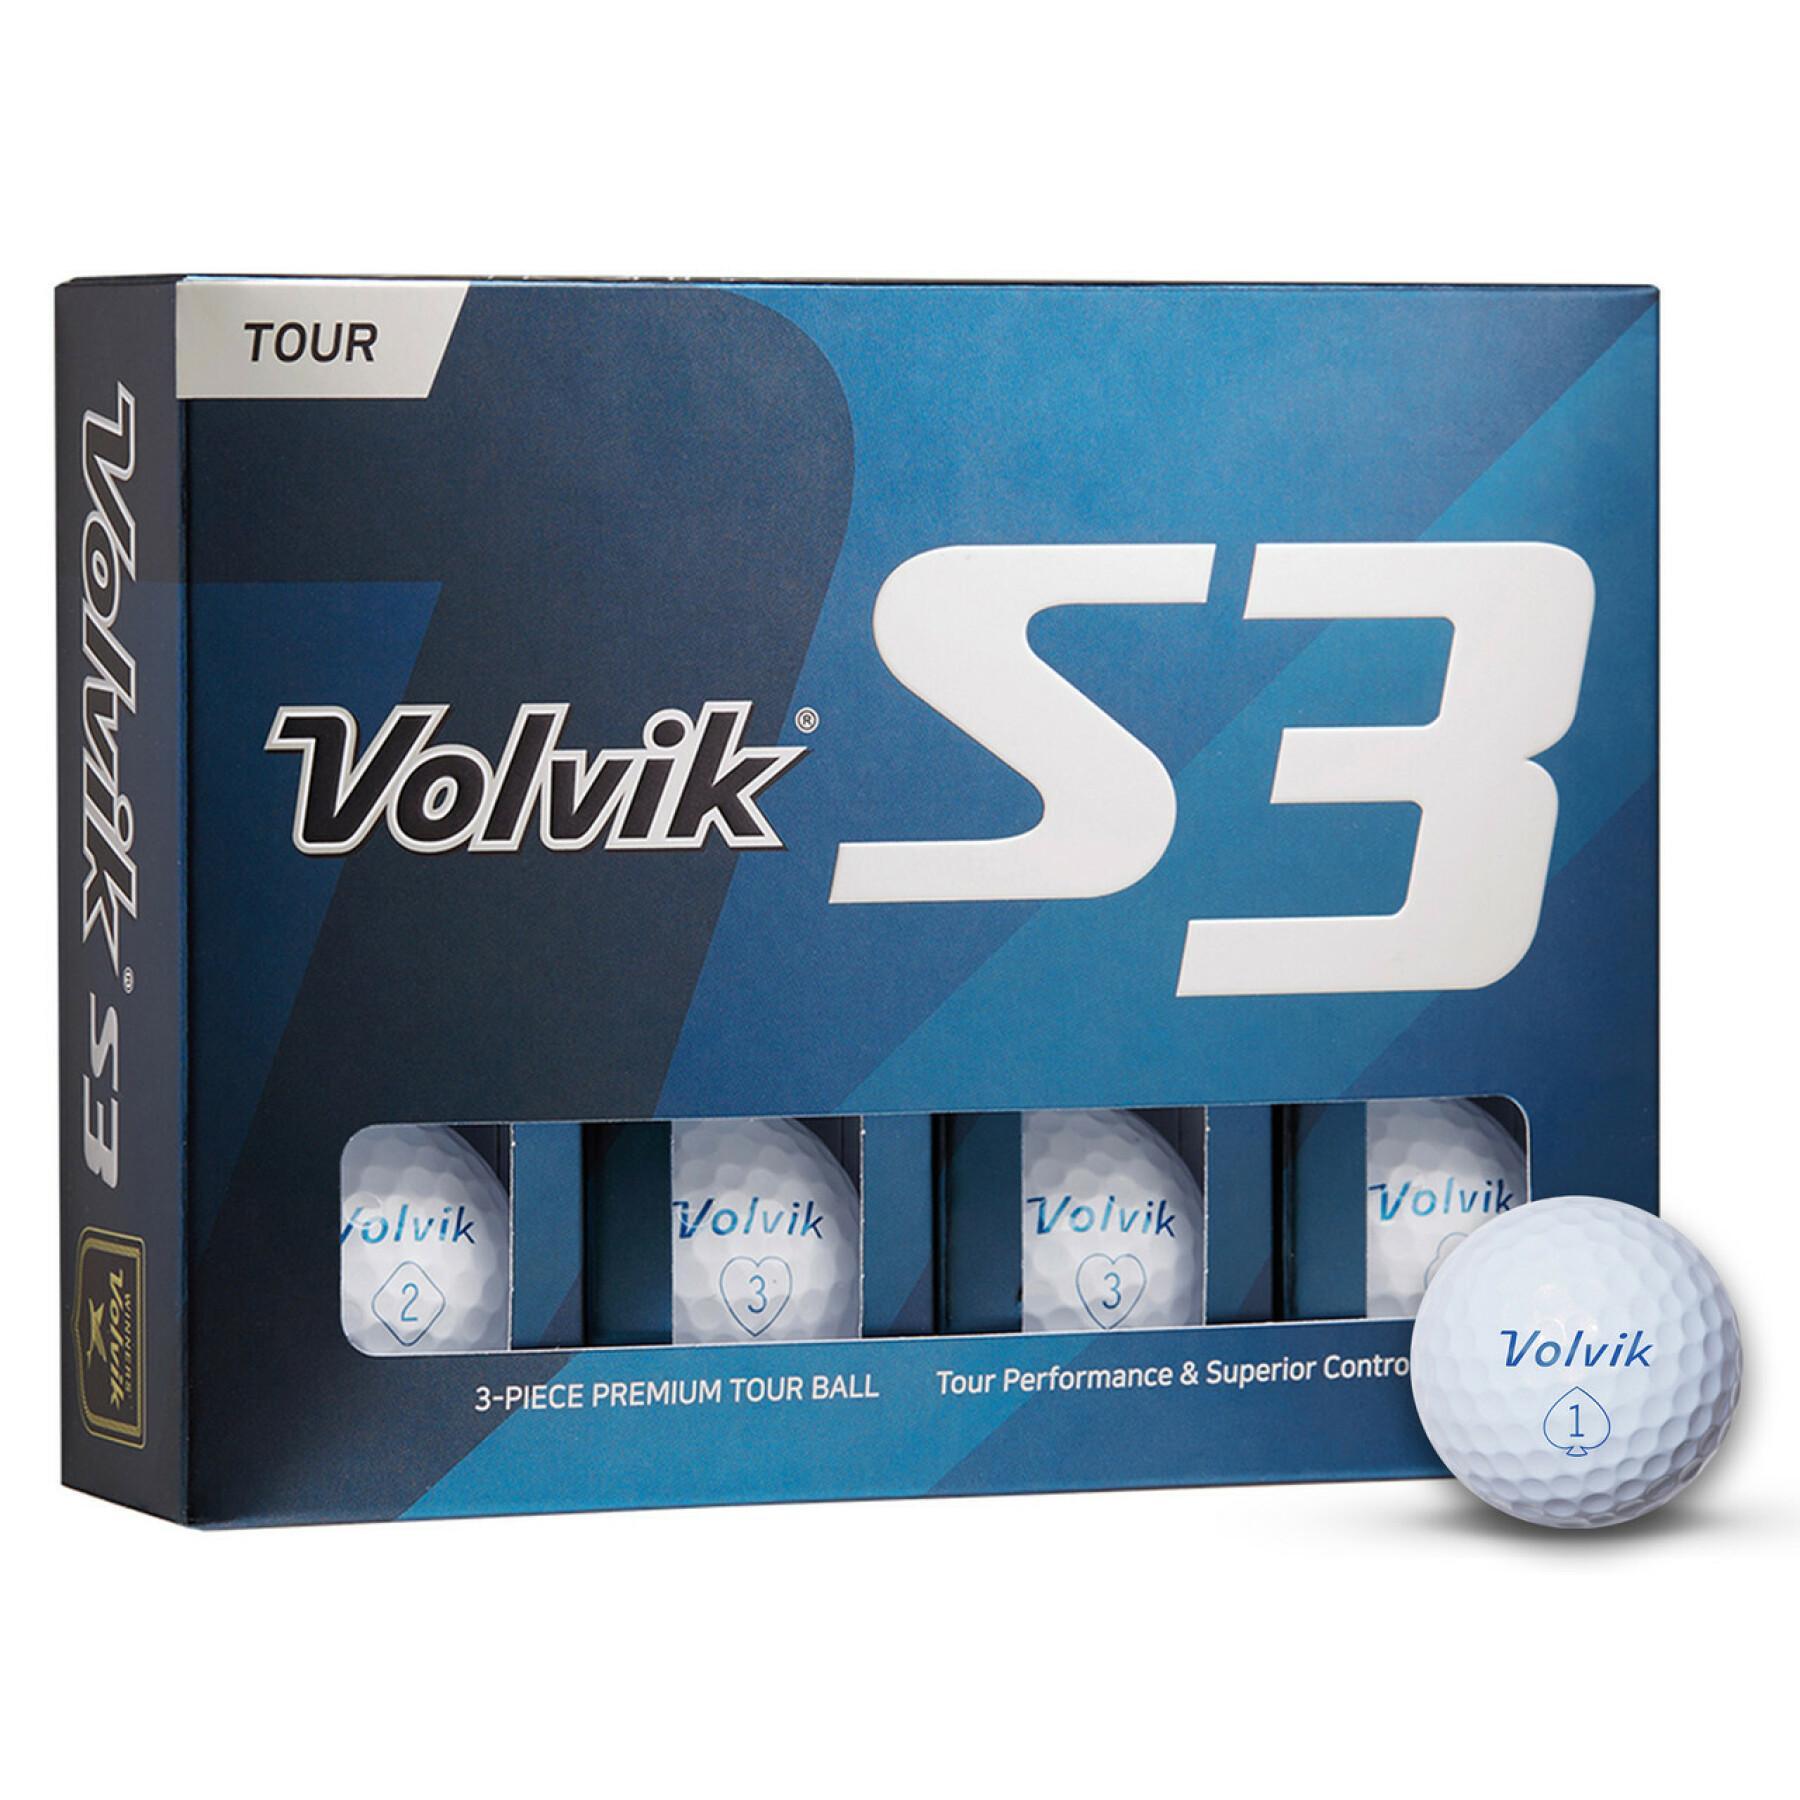 Lot of 12 golf balls Volvik DZ S3